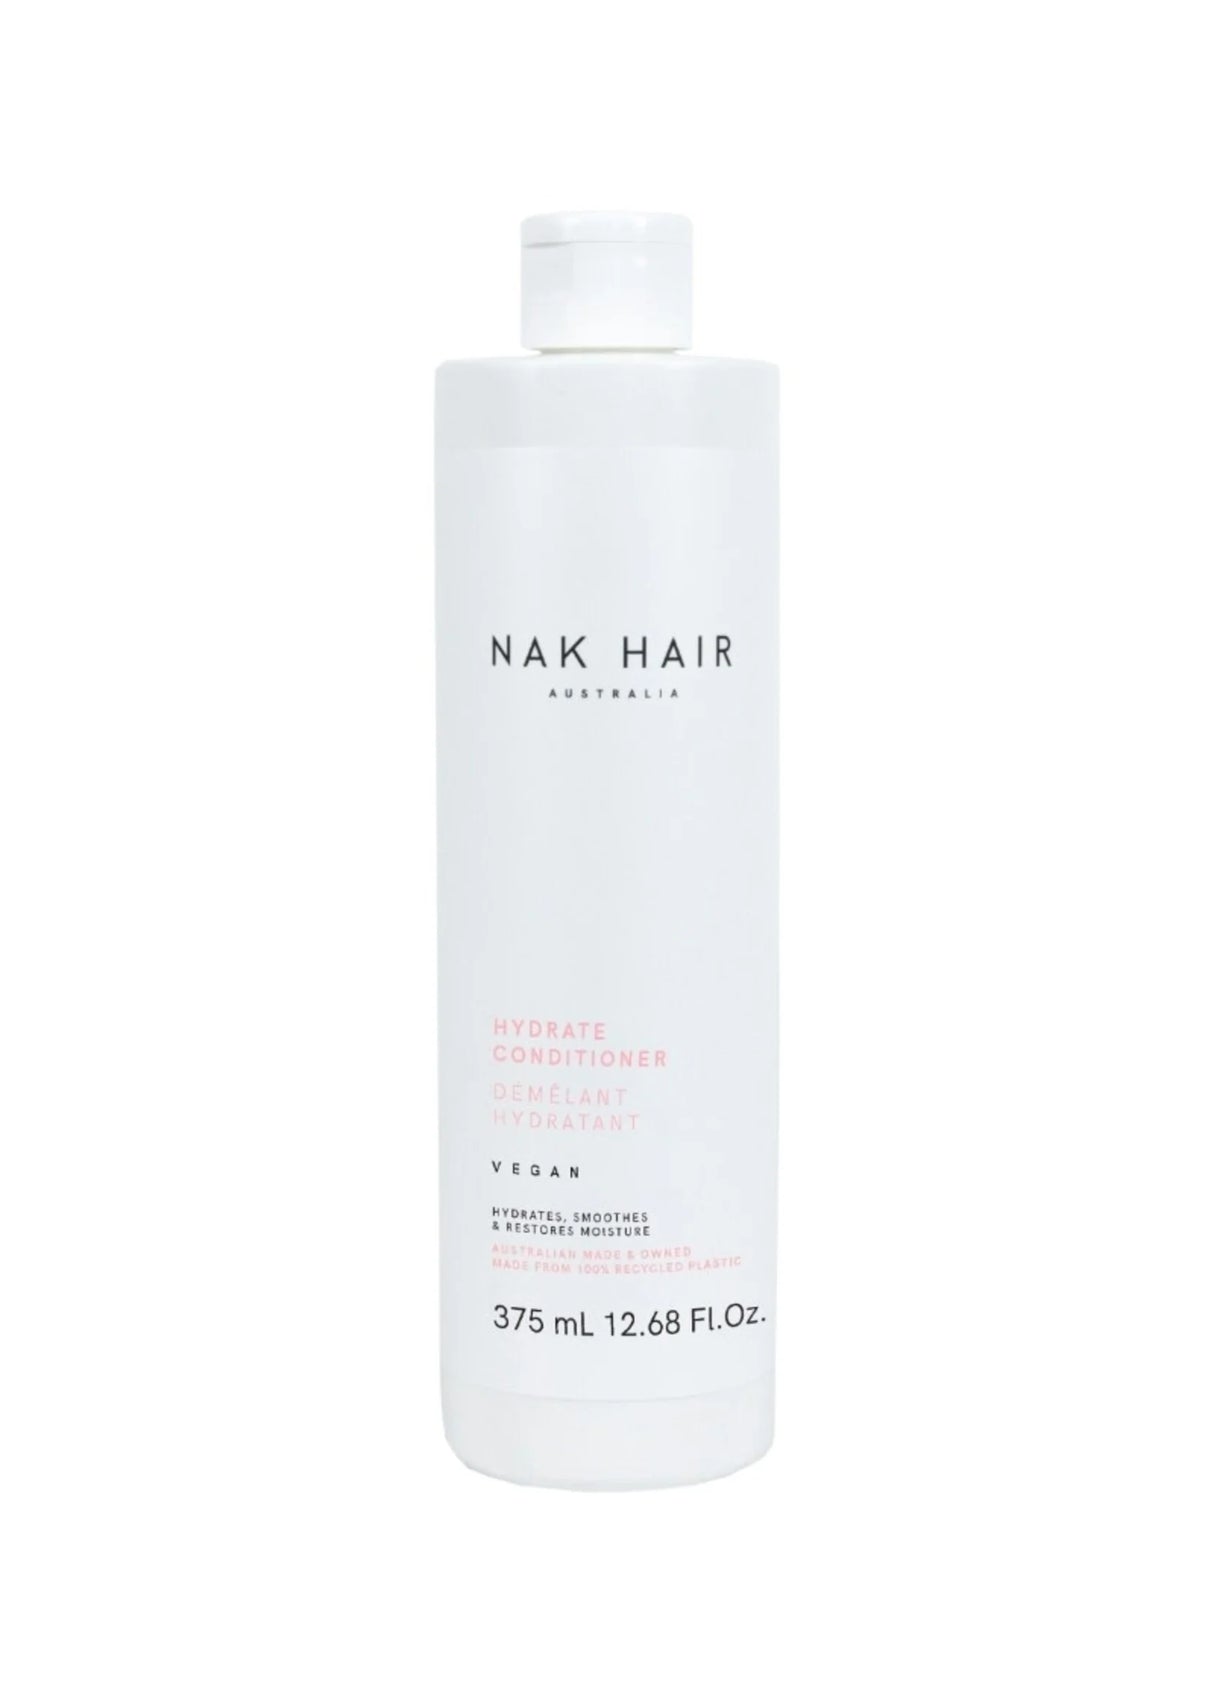 Nak Hair Hydrate Conditioner 375ml